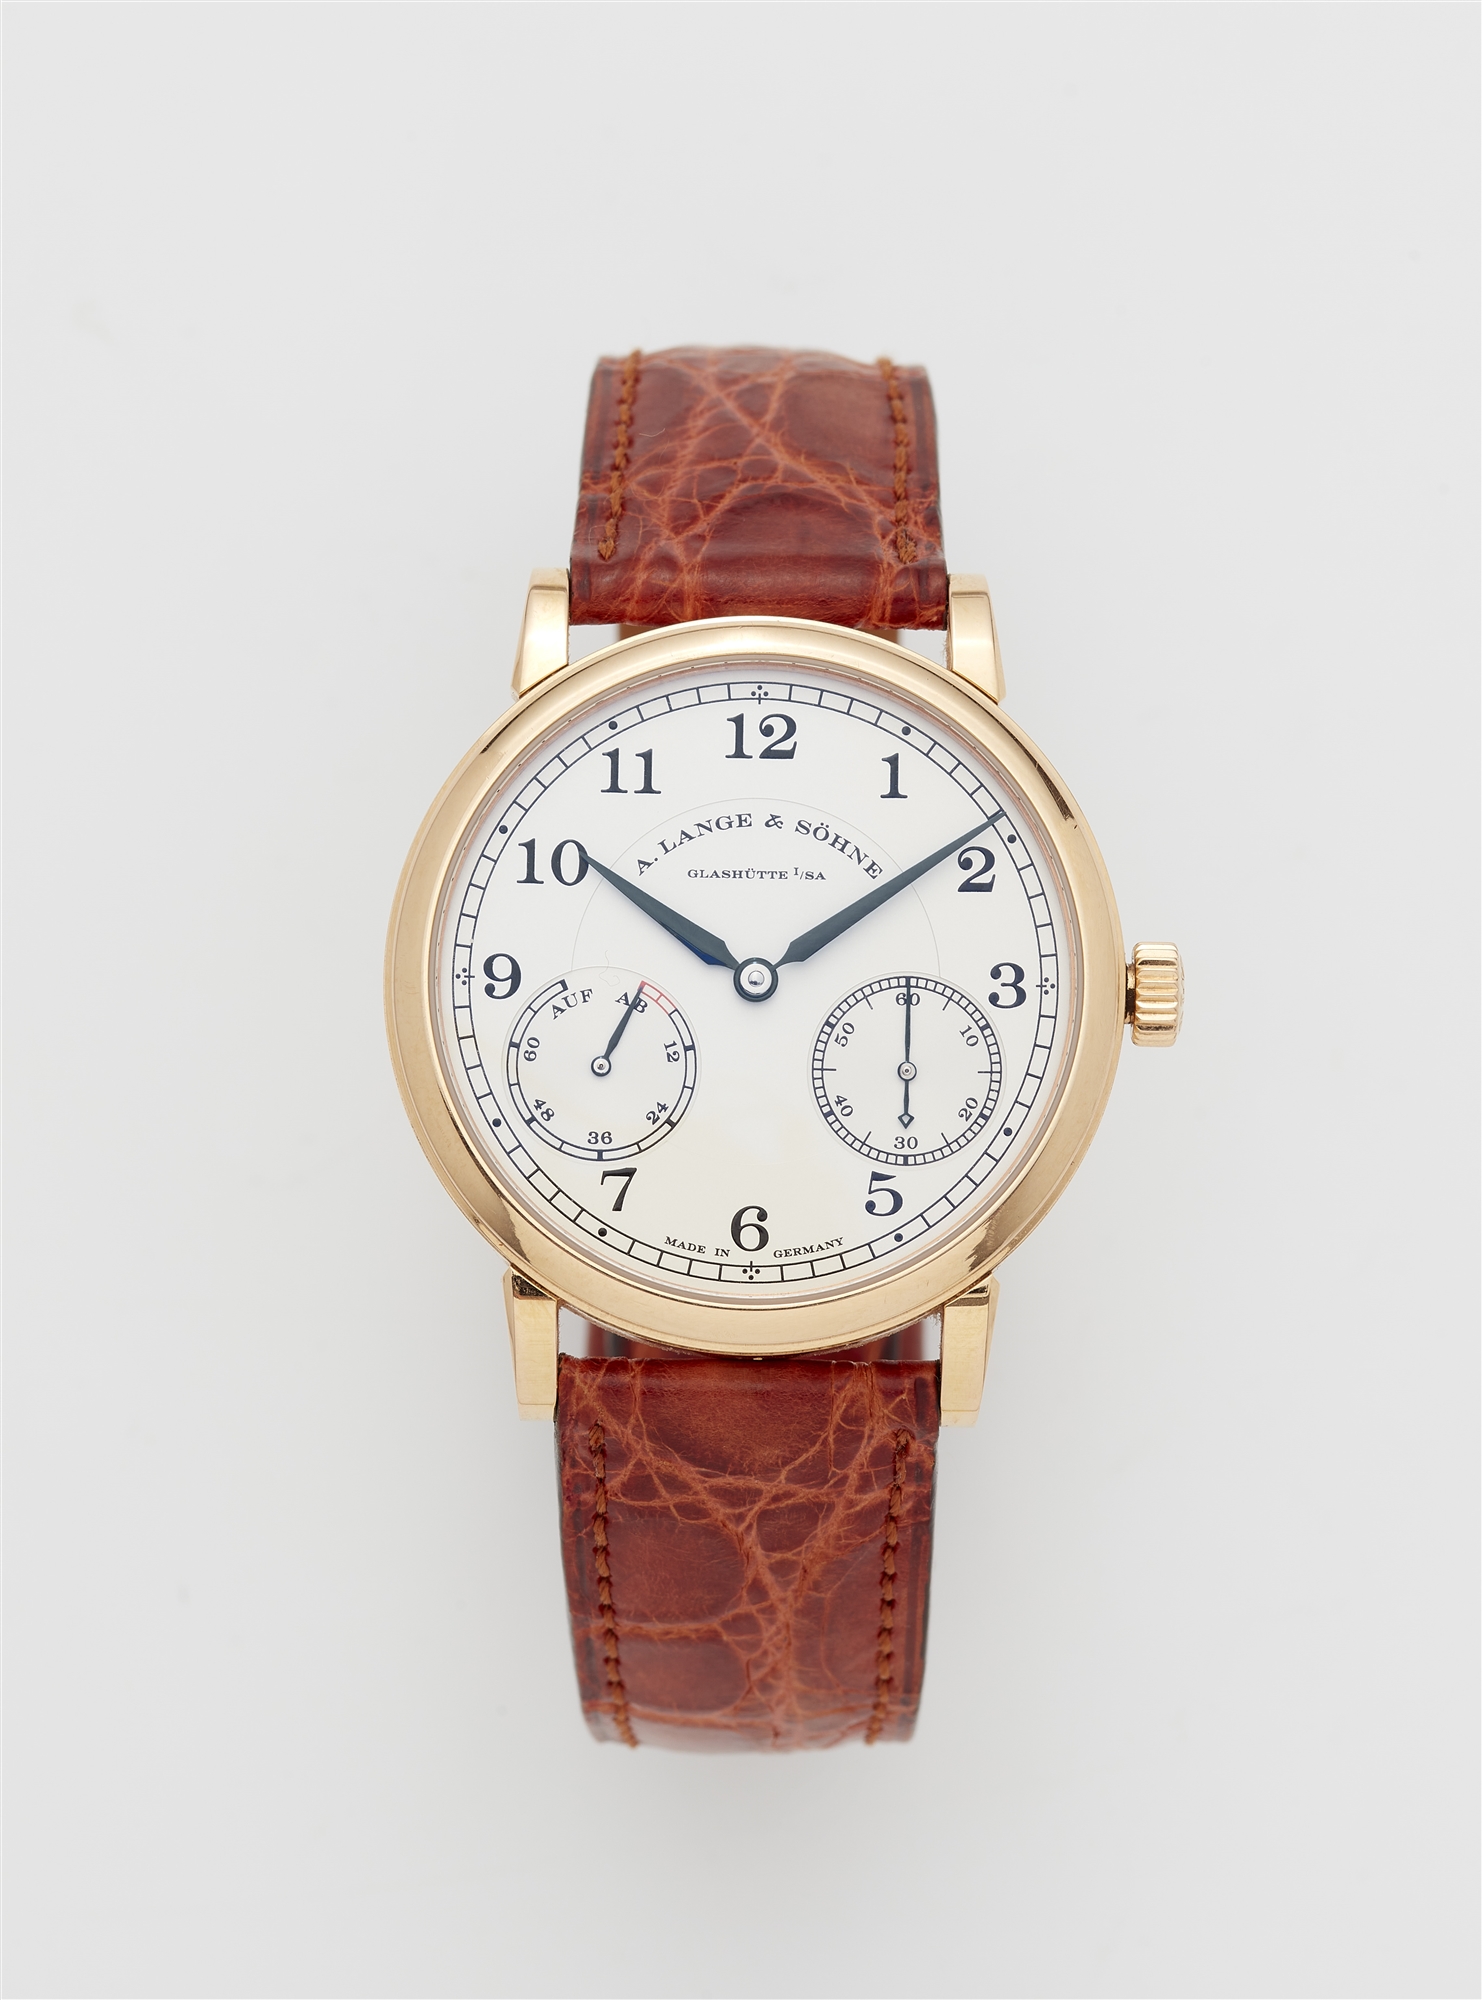 An 18k rose gold manual winding A. Lange & Söhne 1815 Up/Down gentleman´s wristwatch